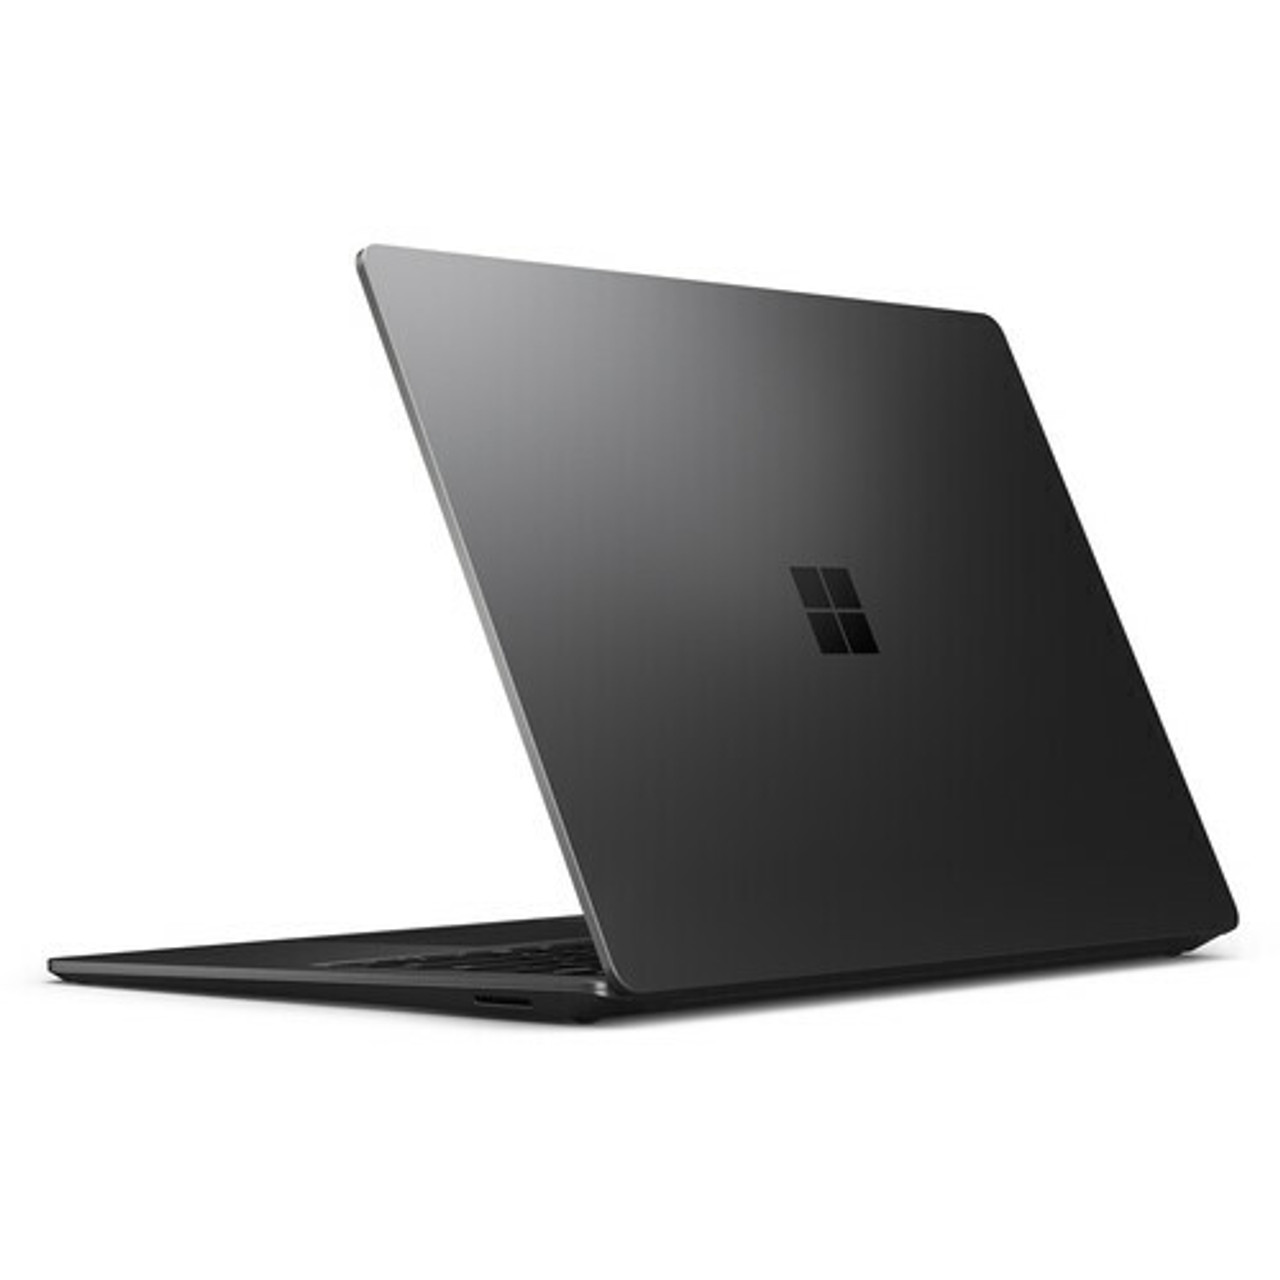 Microsoft Surface Intel Core i5, 8GB RAM, 512GB 13.5" Touchscreen, Windows 10, Black